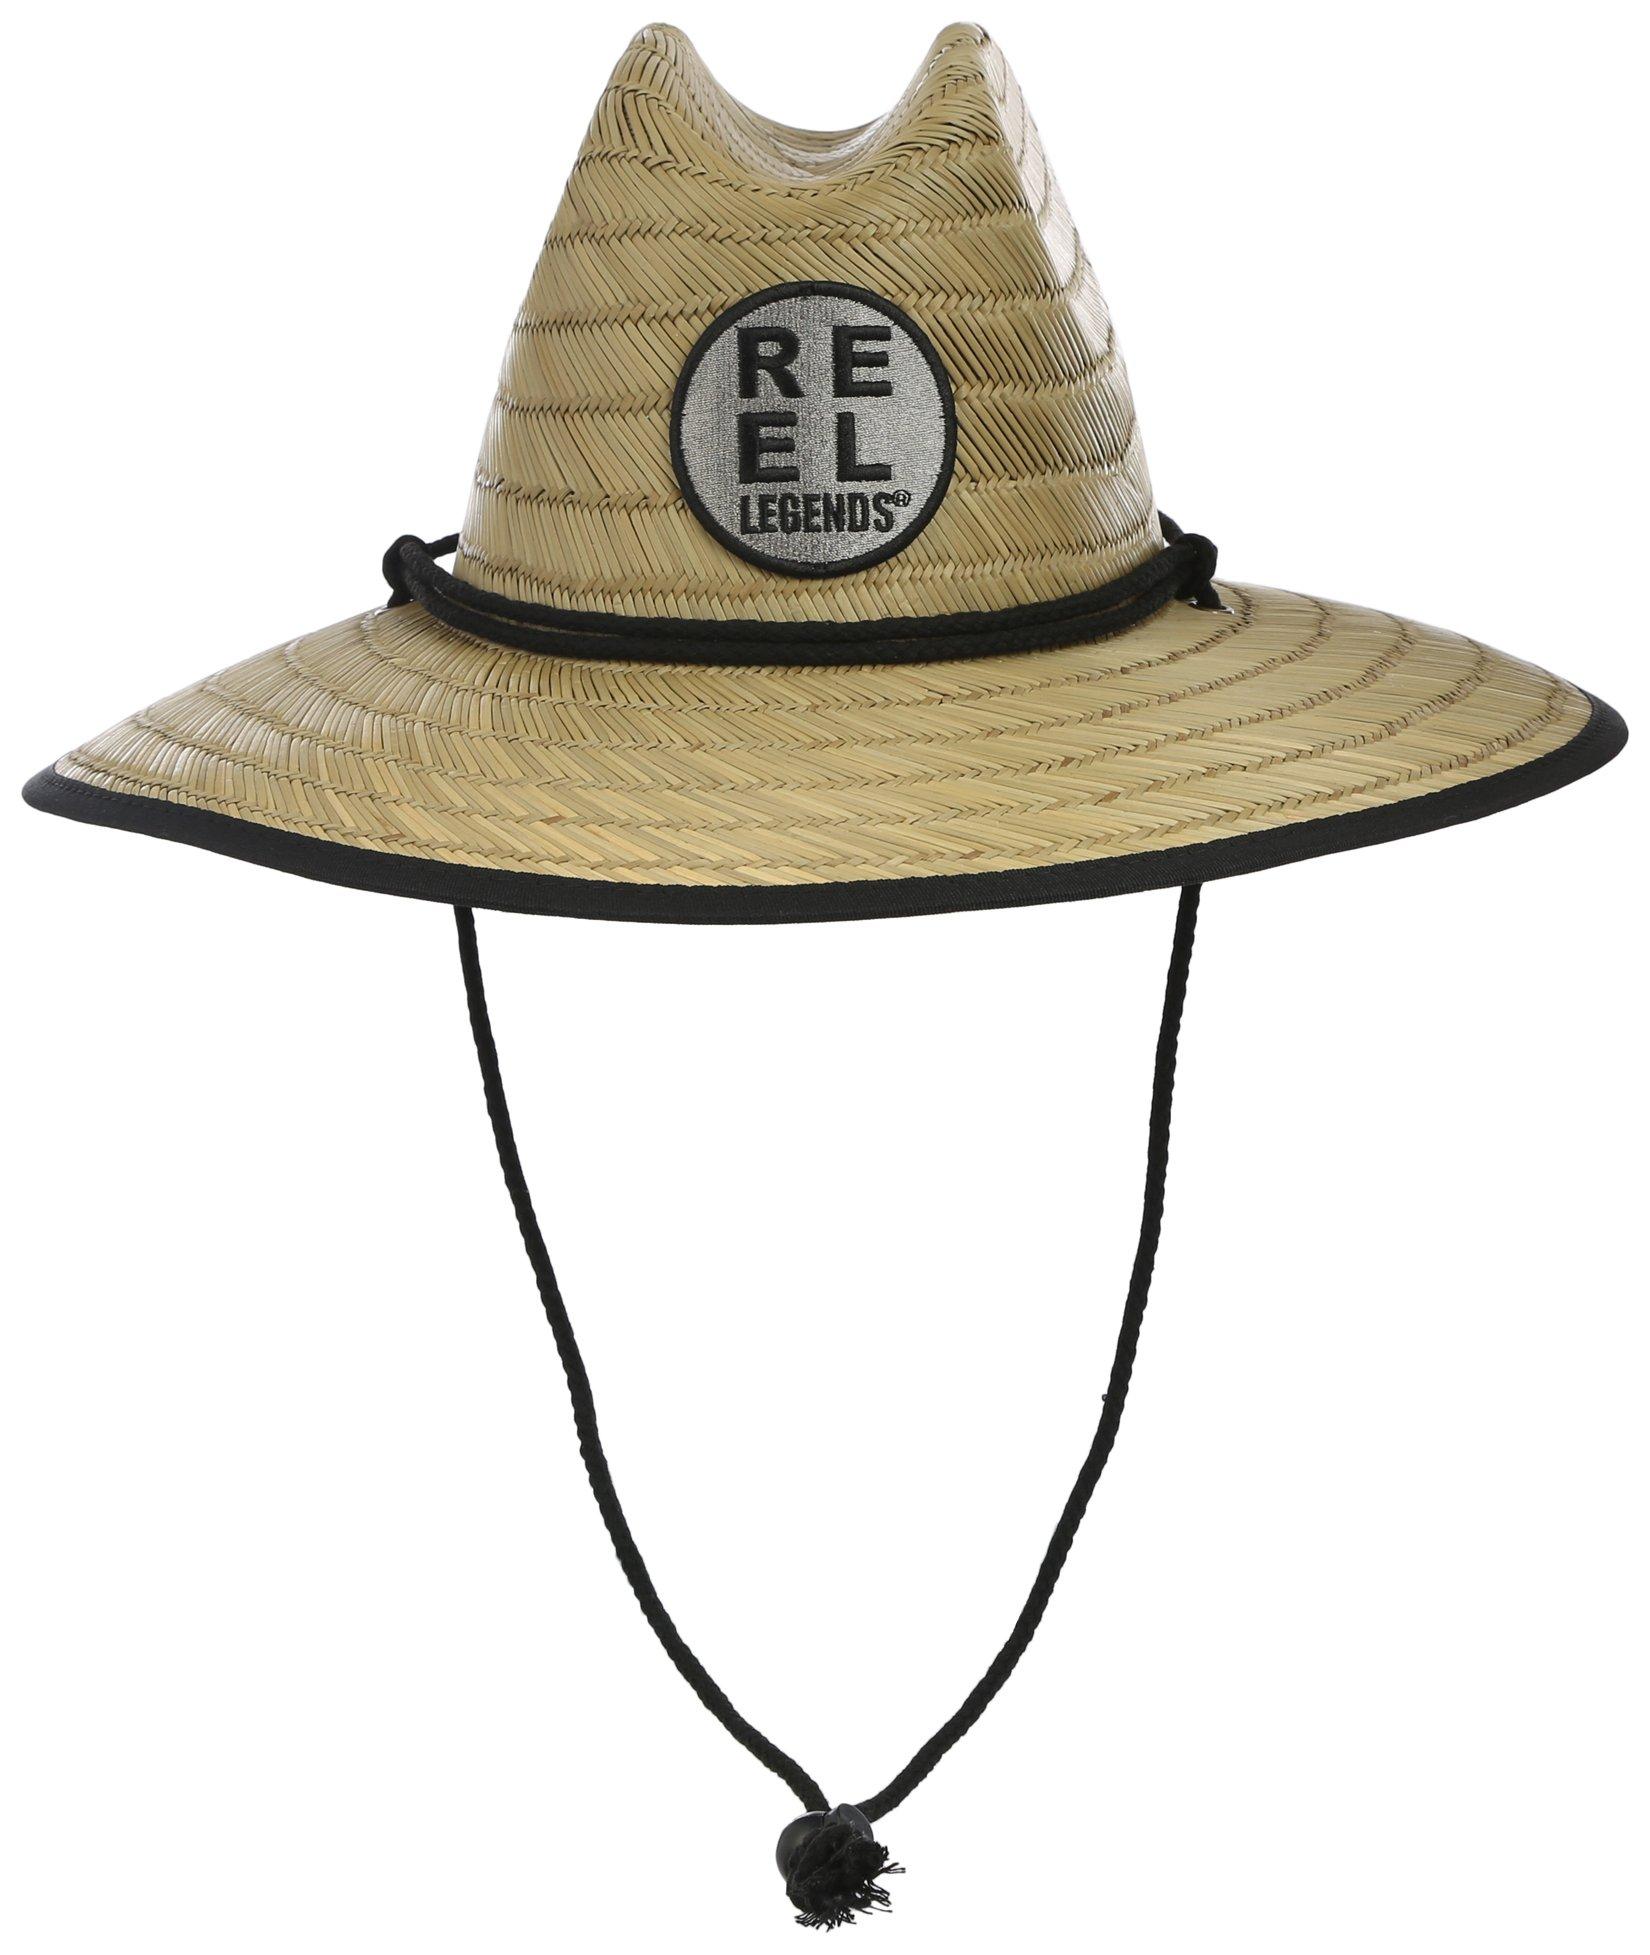 Hook & Tackle Sails & Stripes Straw Lifeguard Hat | Size Medium/Large